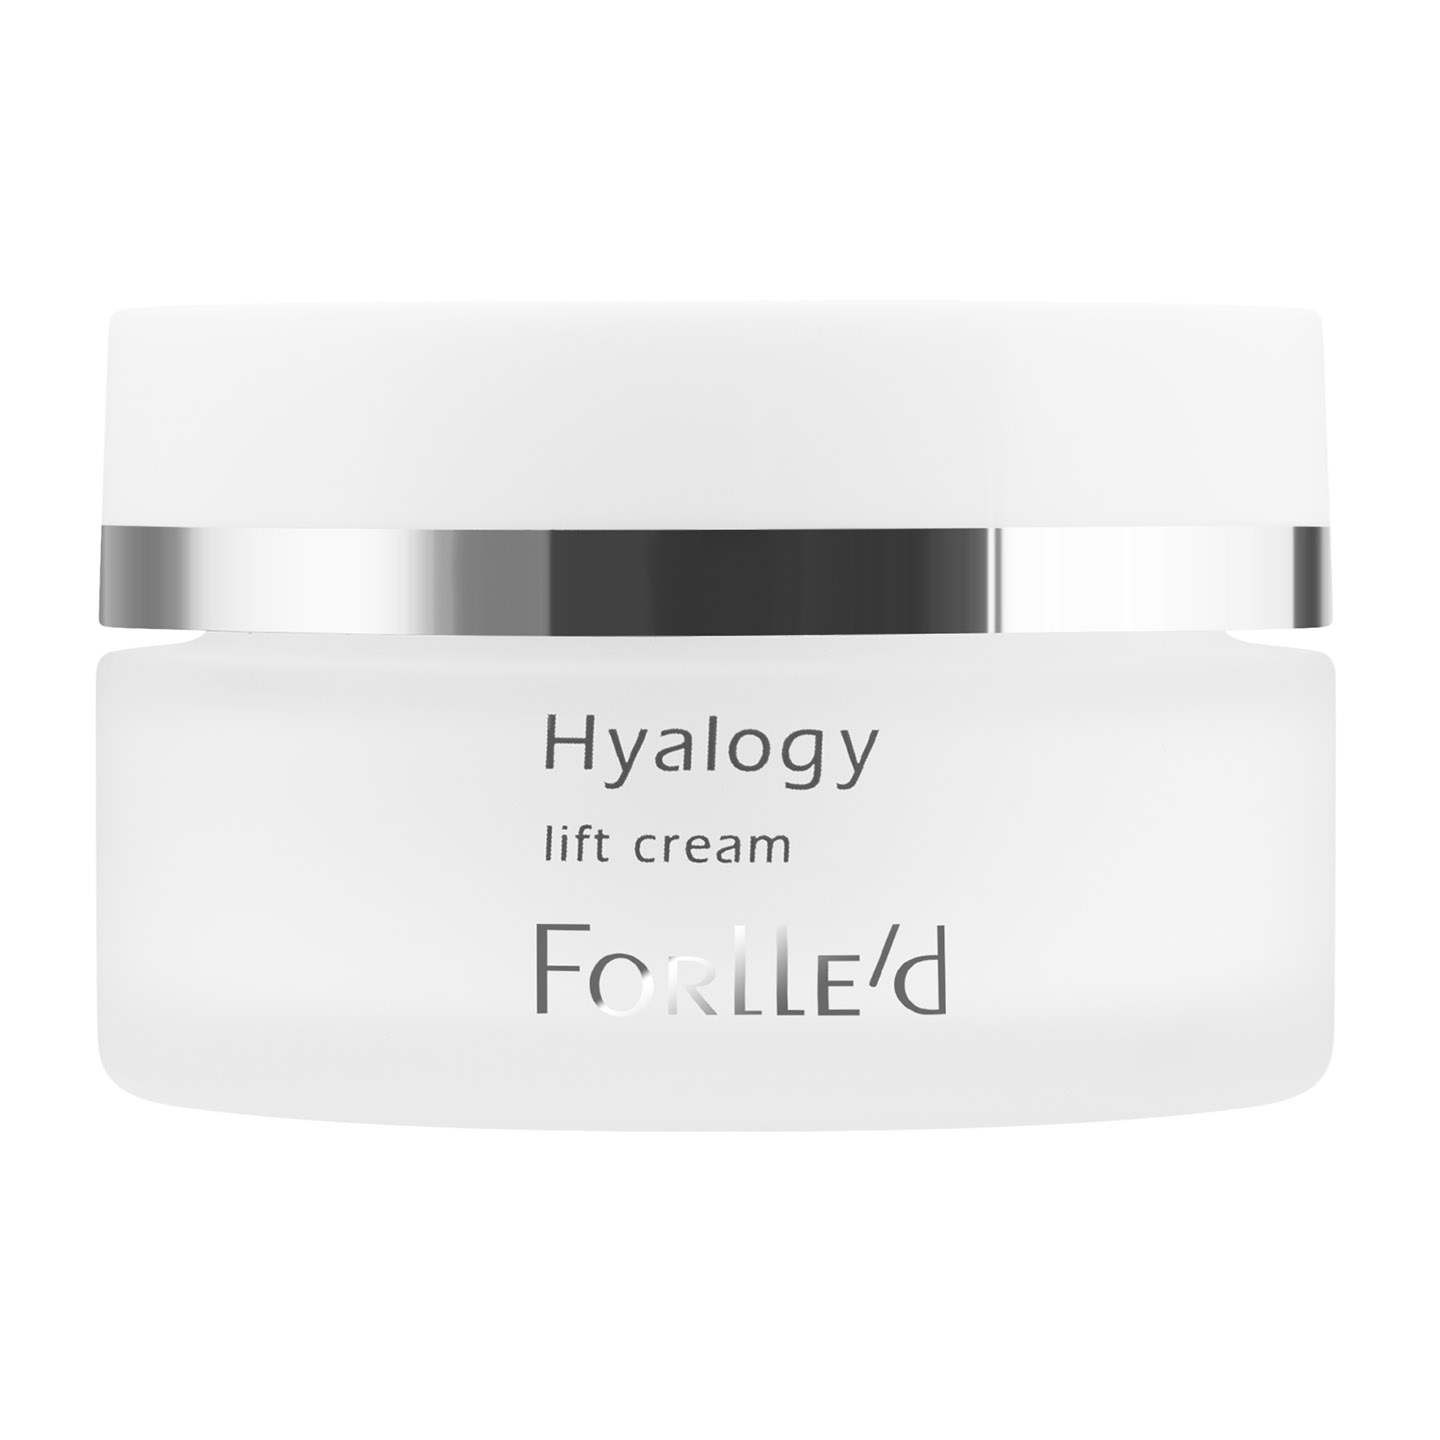 Hyalogy lift cream 